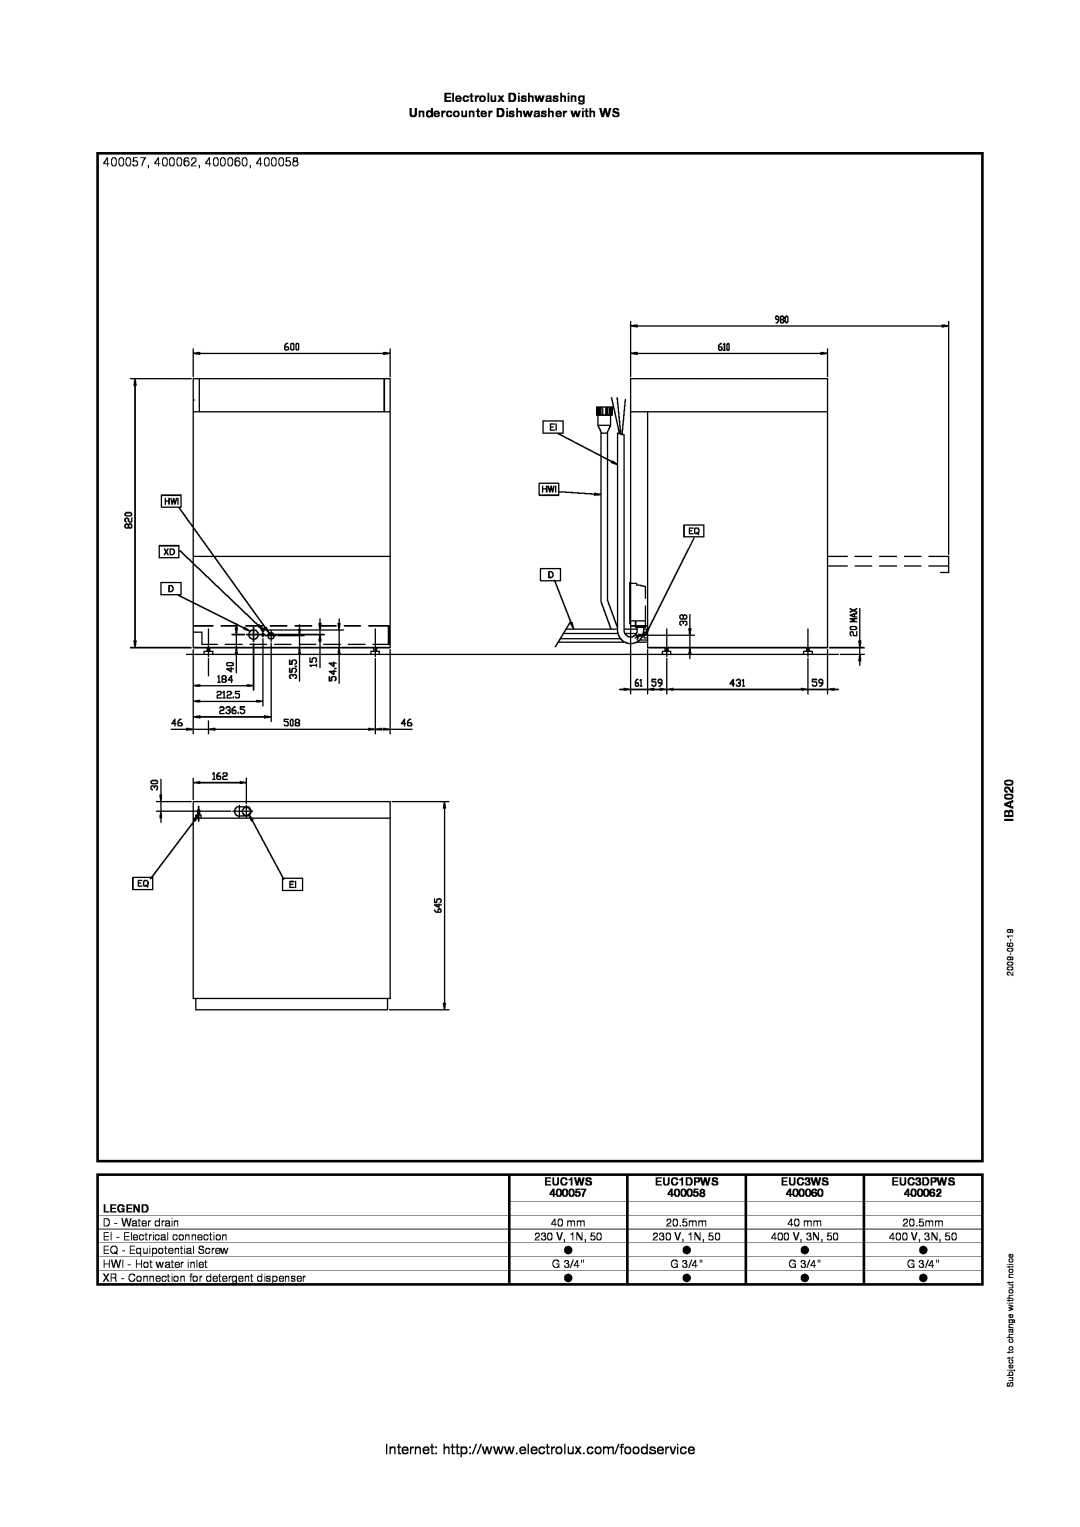 Electrolux EUC1WS 400057, 400062, 400060, Electrolux Dishwashing Undercounter Dishwasher with WS, IBA020, EUC1DPWS, EUC3WS 